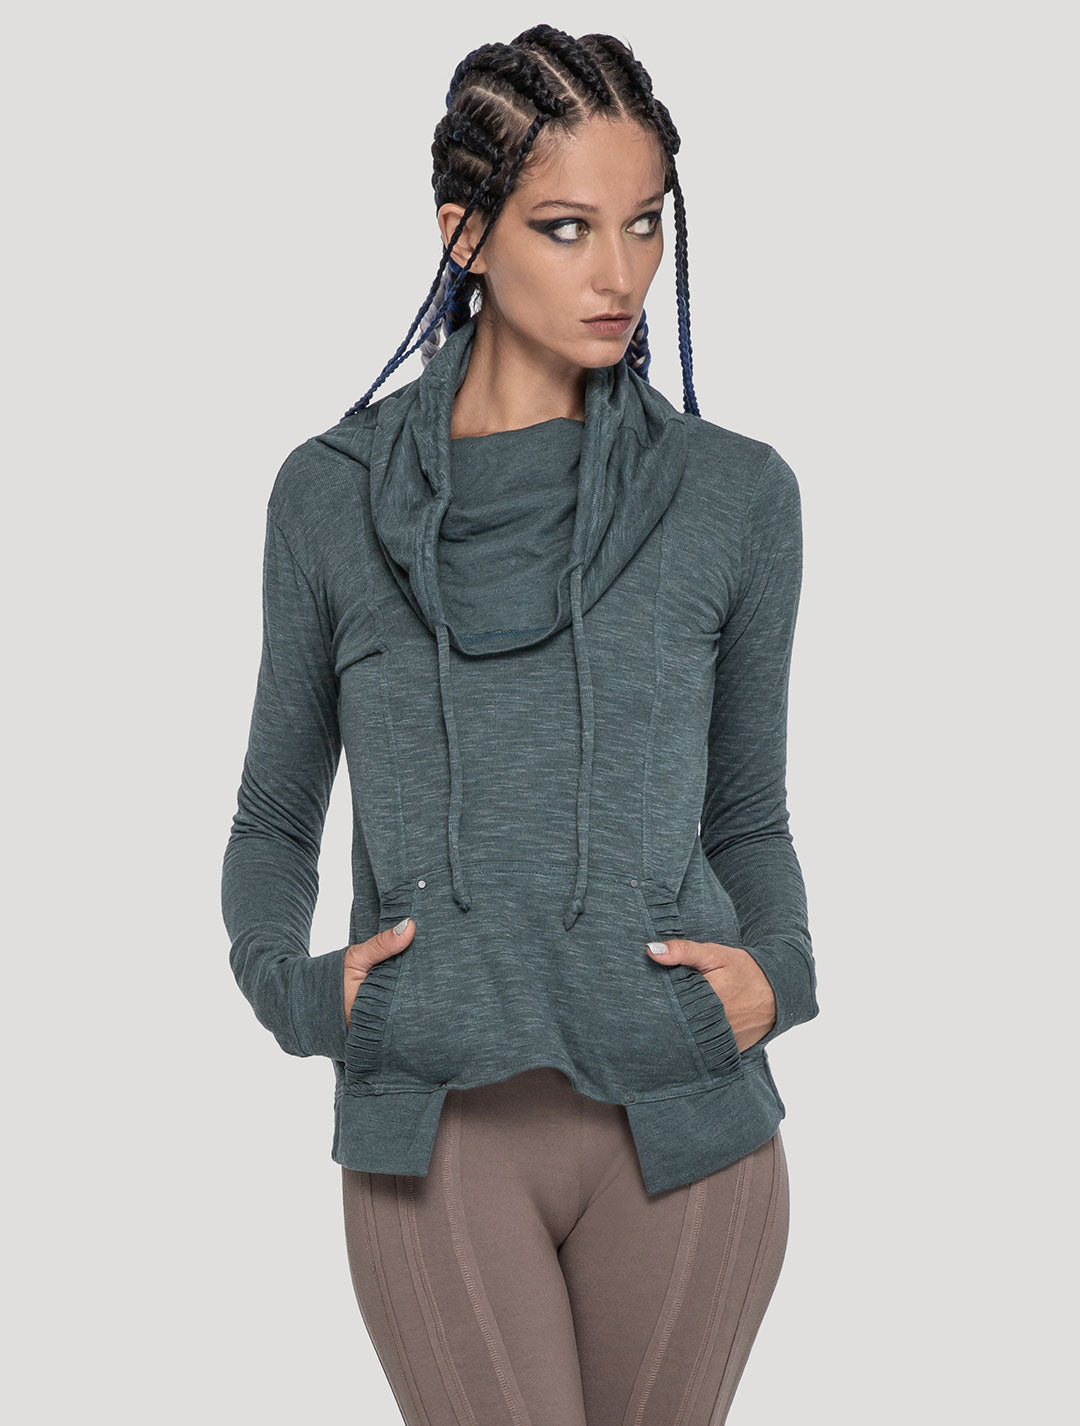 Teal Samu Turtle Neck Sweater - Psylo Fashion